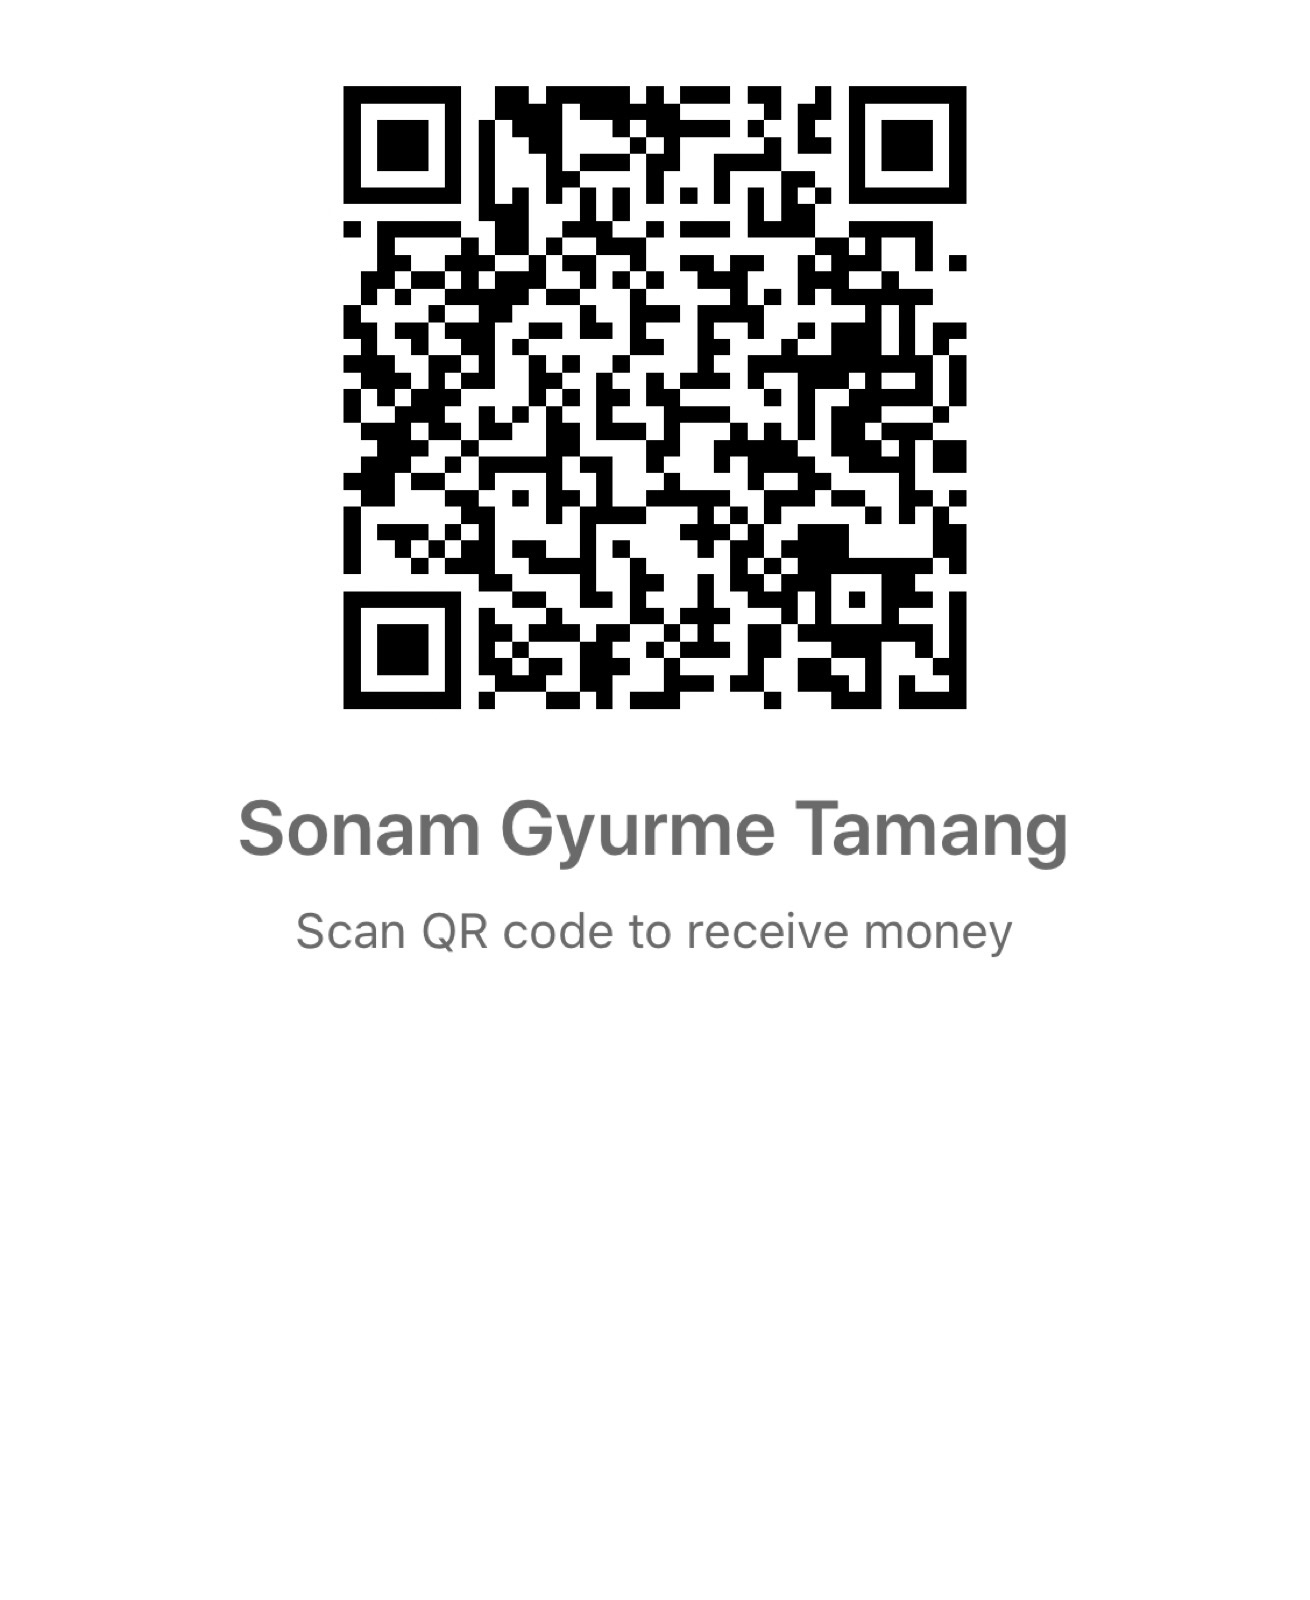 esewa payment qr code